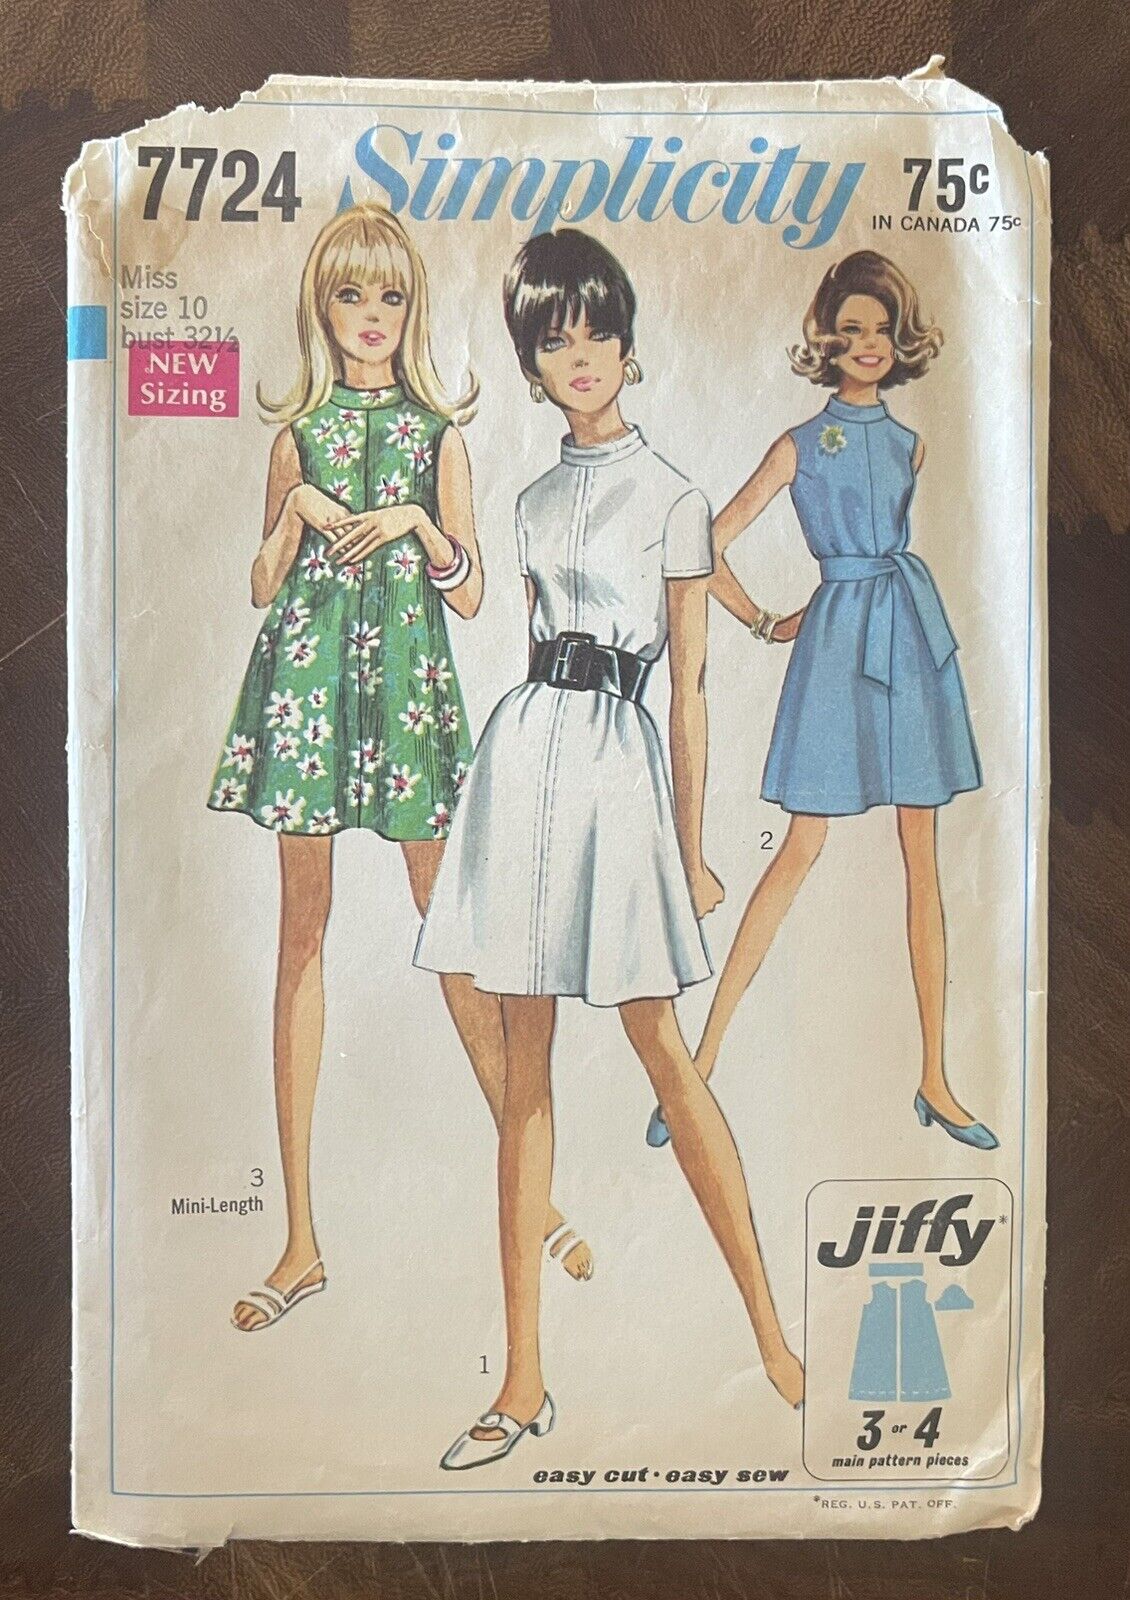 Vintage ORIGINAL 1960s Simplicity Jiffy Sewing Pattern Dress 7724